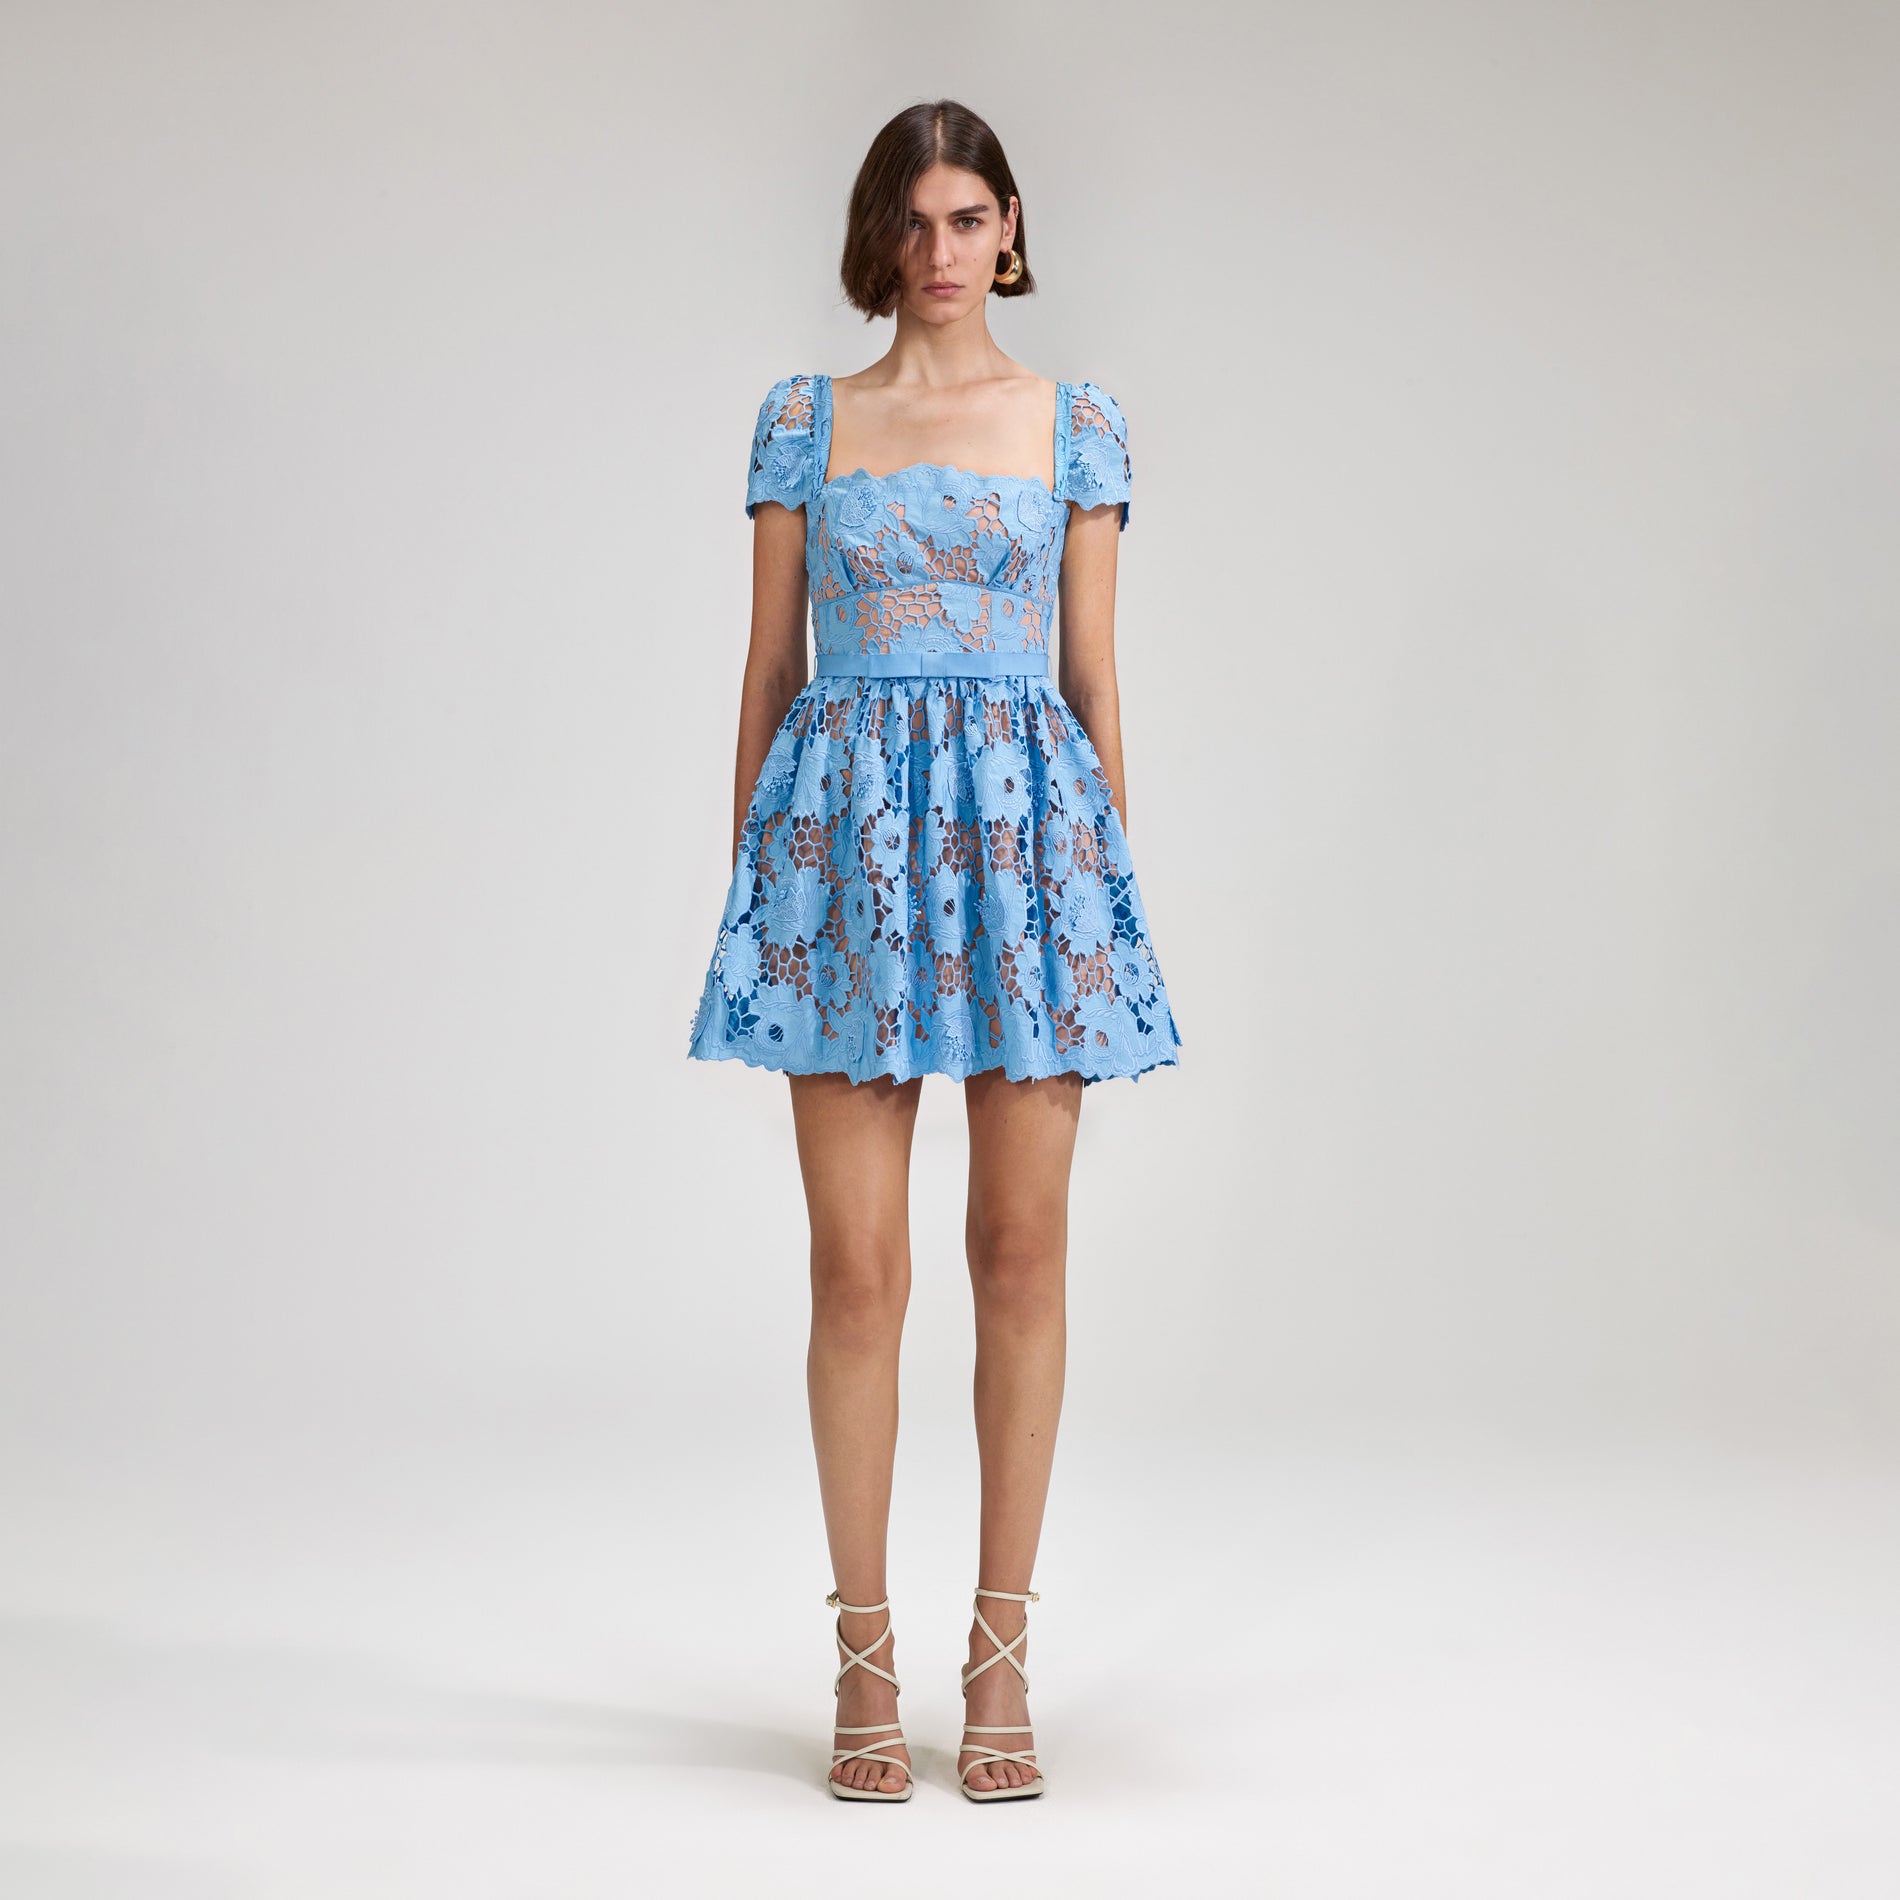 A woman wearing the Blue 3D Cotton Lace Mini Dress